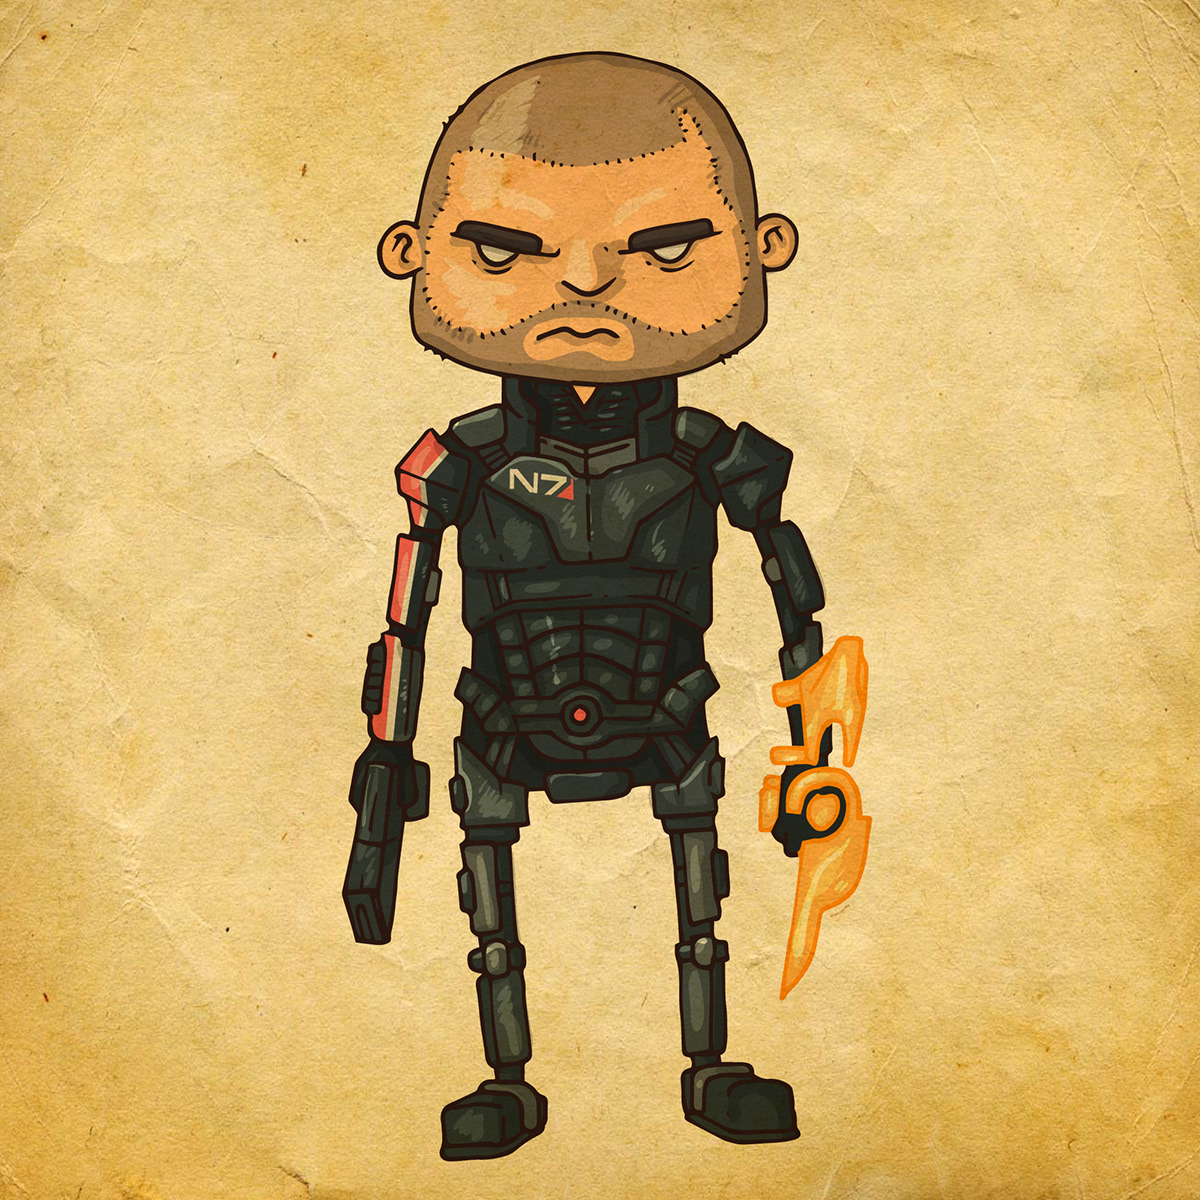 mass effect witcher Raiden Metal Gear sparrow jack captain Booker BioShock shepard jocker Han Solo star wars pirates darth vader